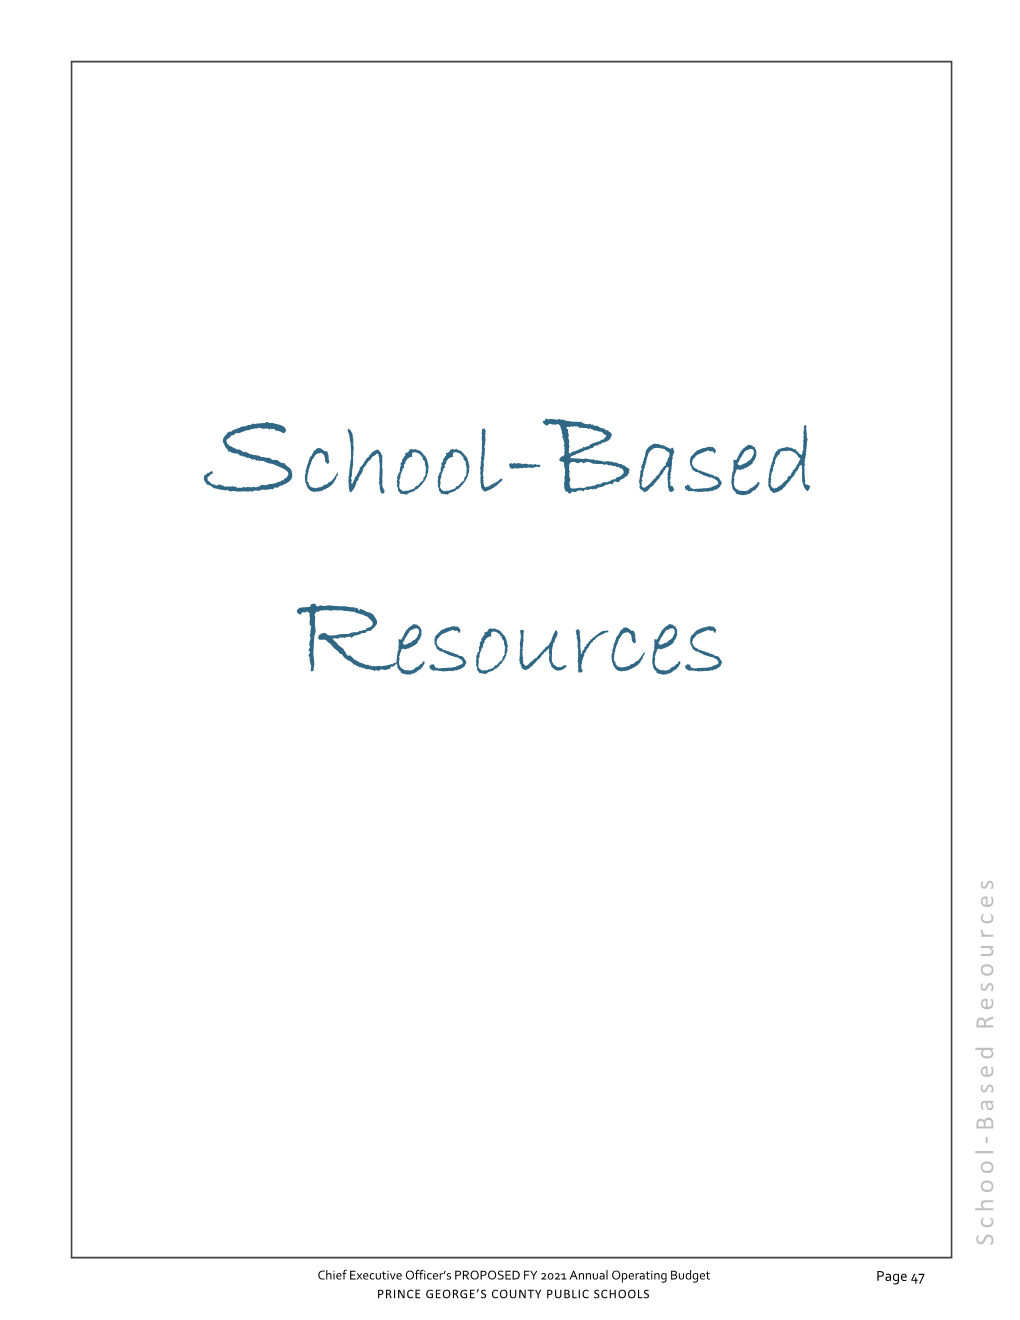 School-Based Resources